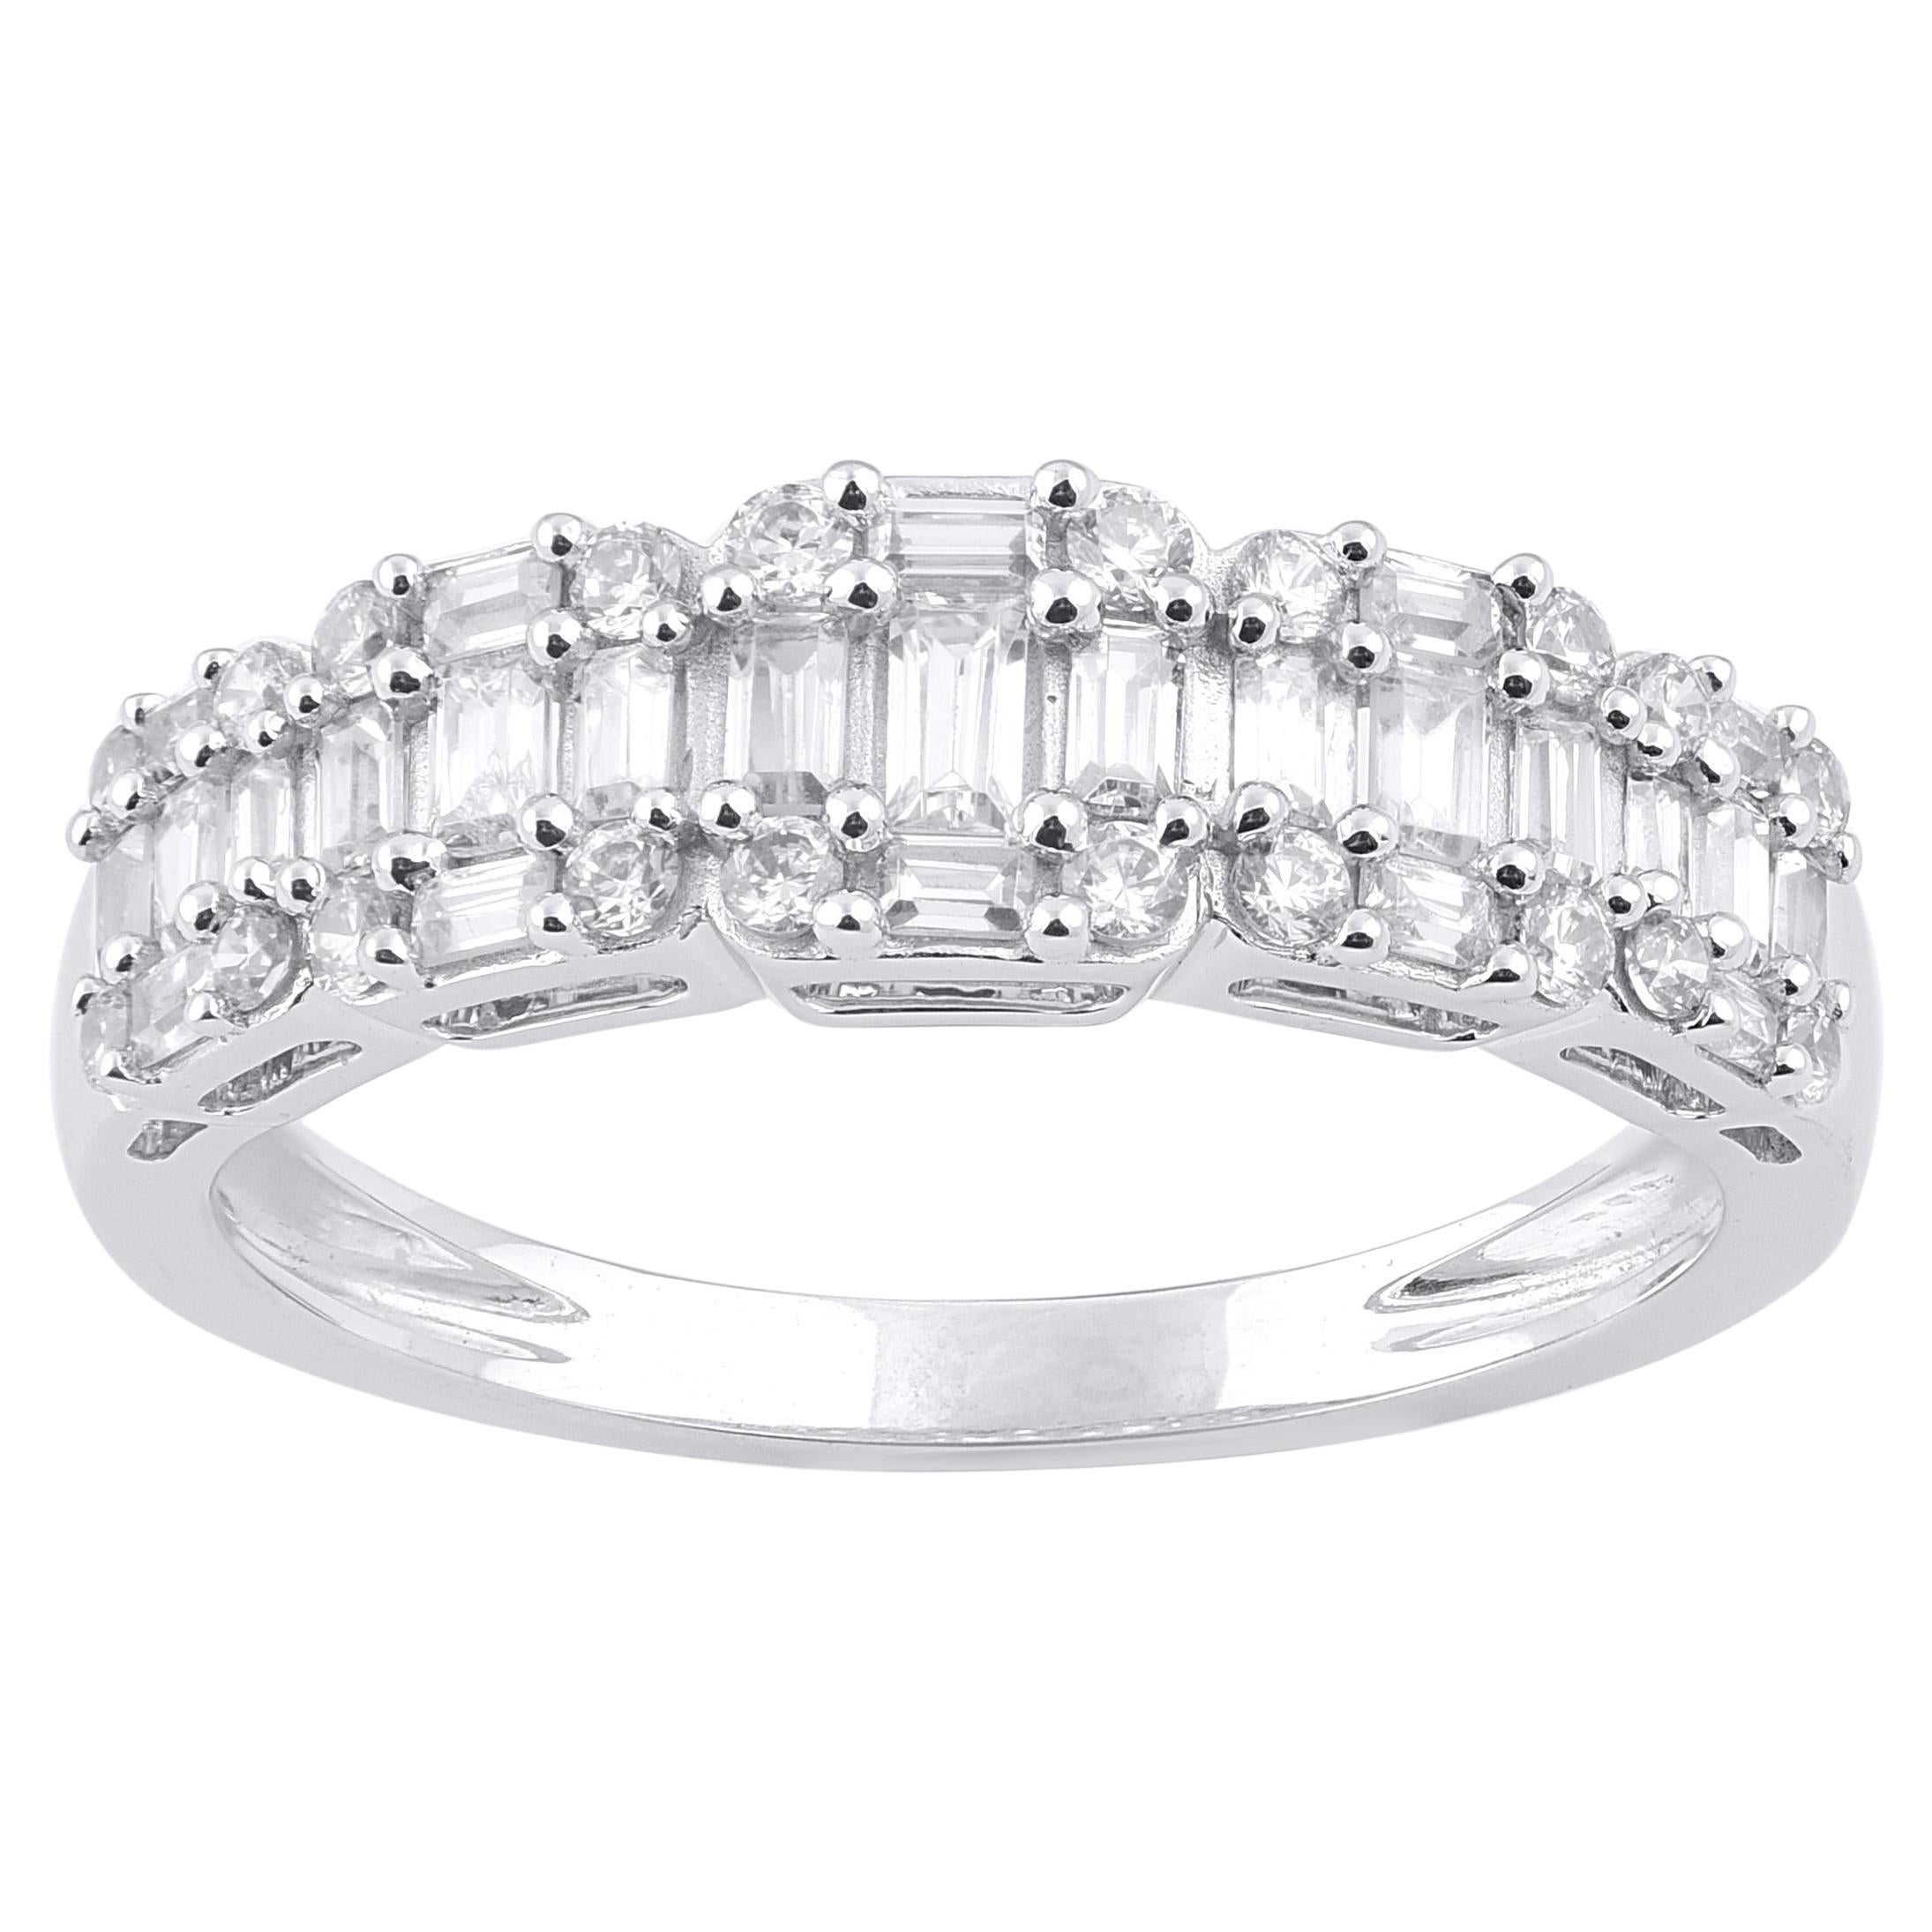 TJD 1.0 Carat Round & Baguette Cut Diamond 18 Karat White Gold Wedding Band Ring For Sale